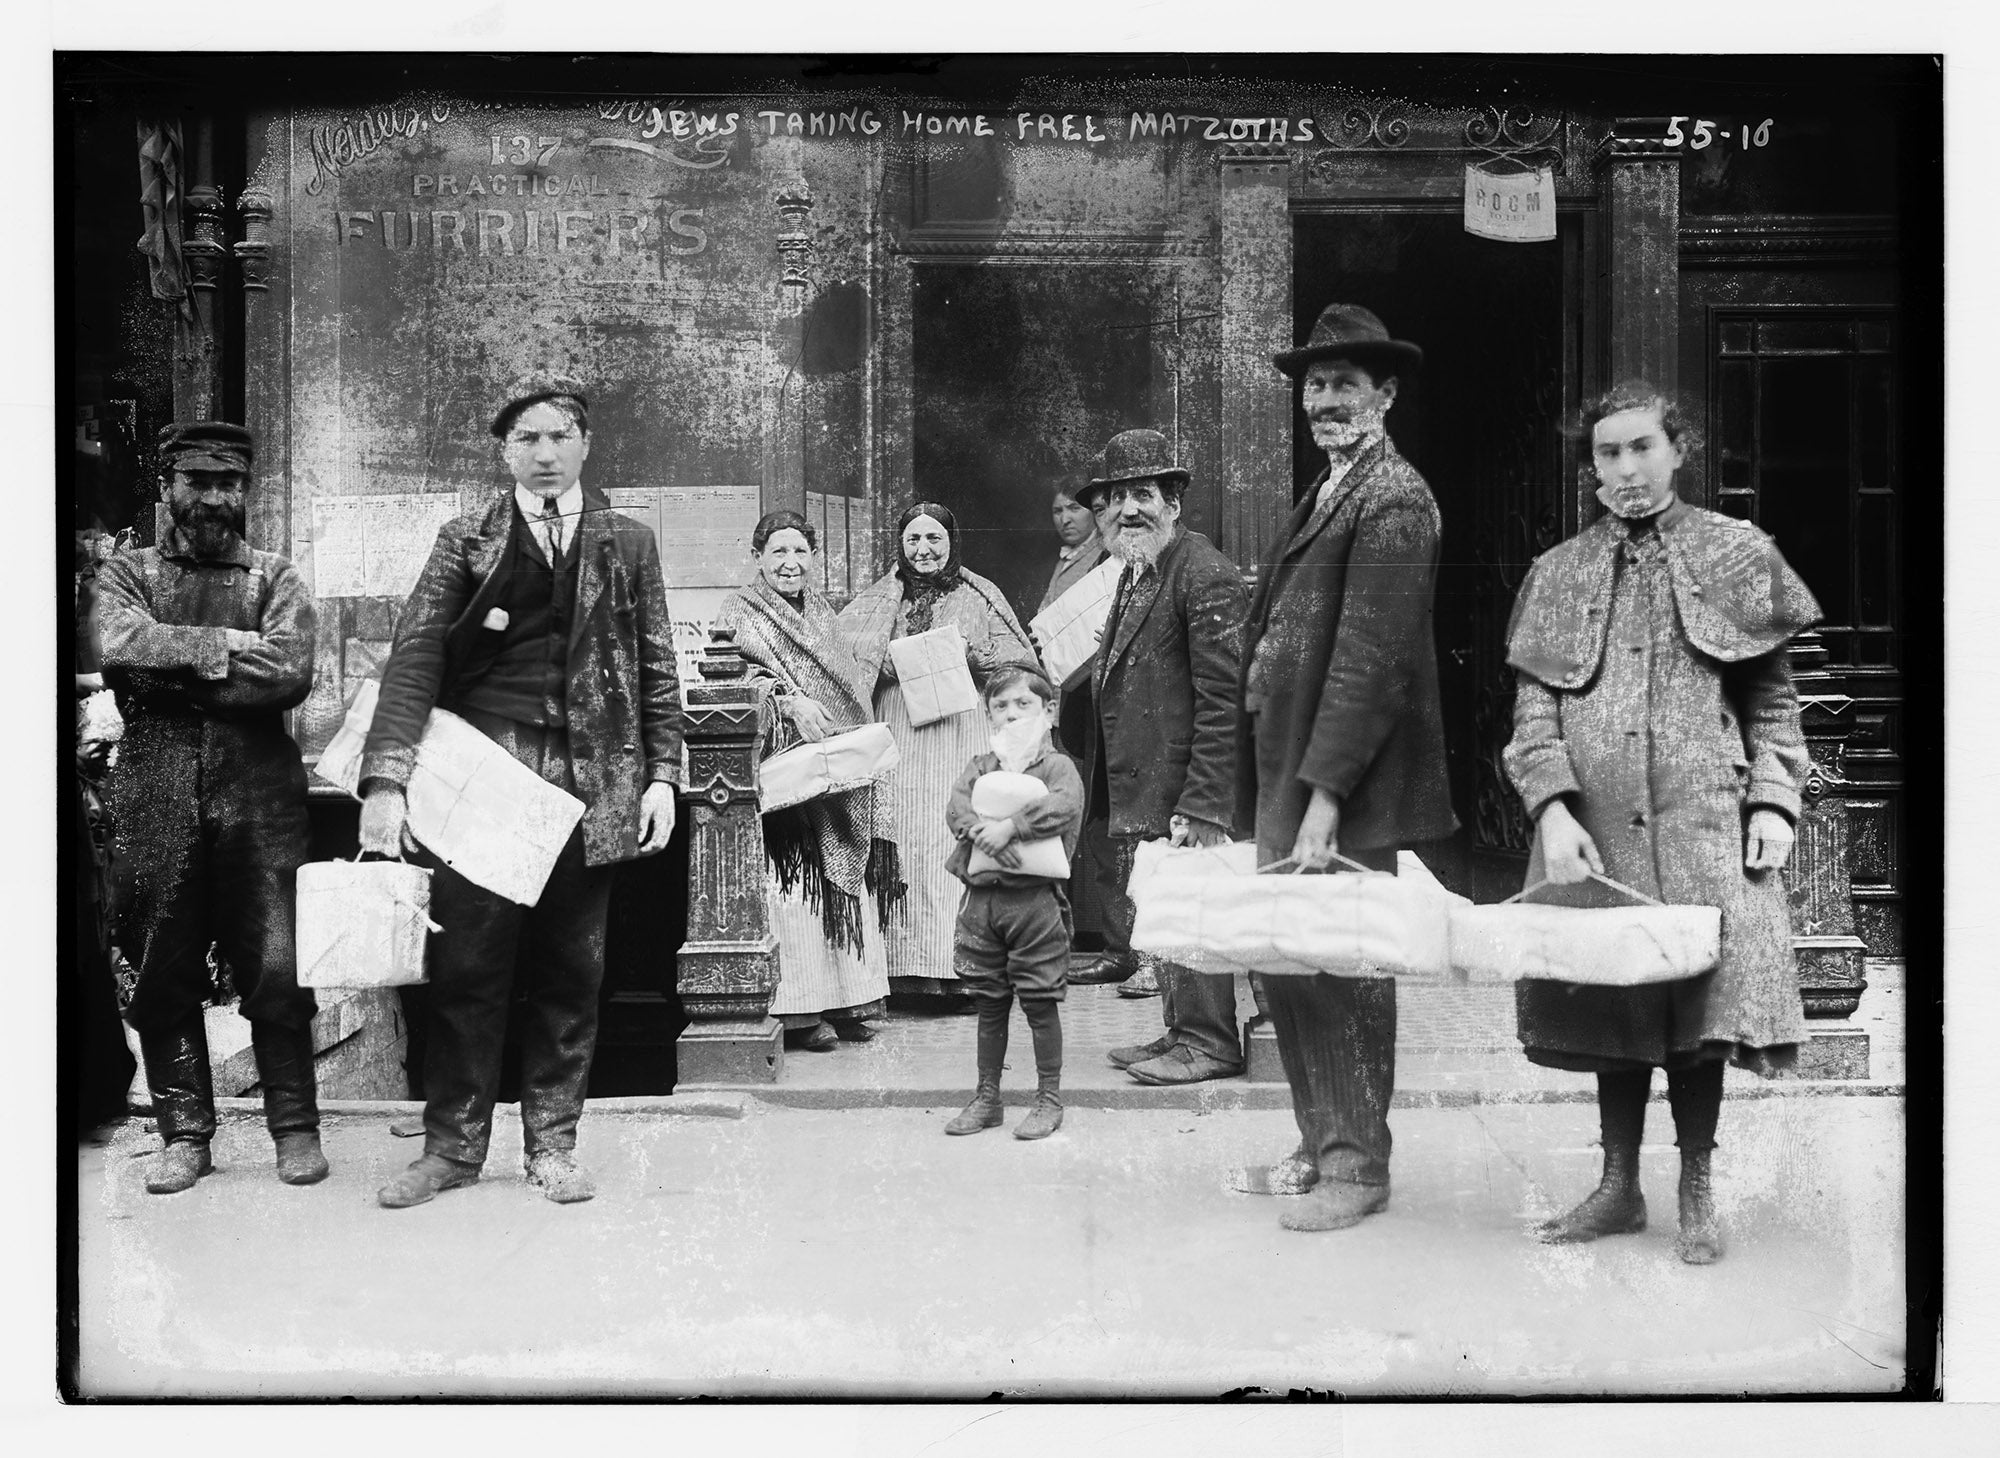 Jews taking home free matzoths, New York City, 1908